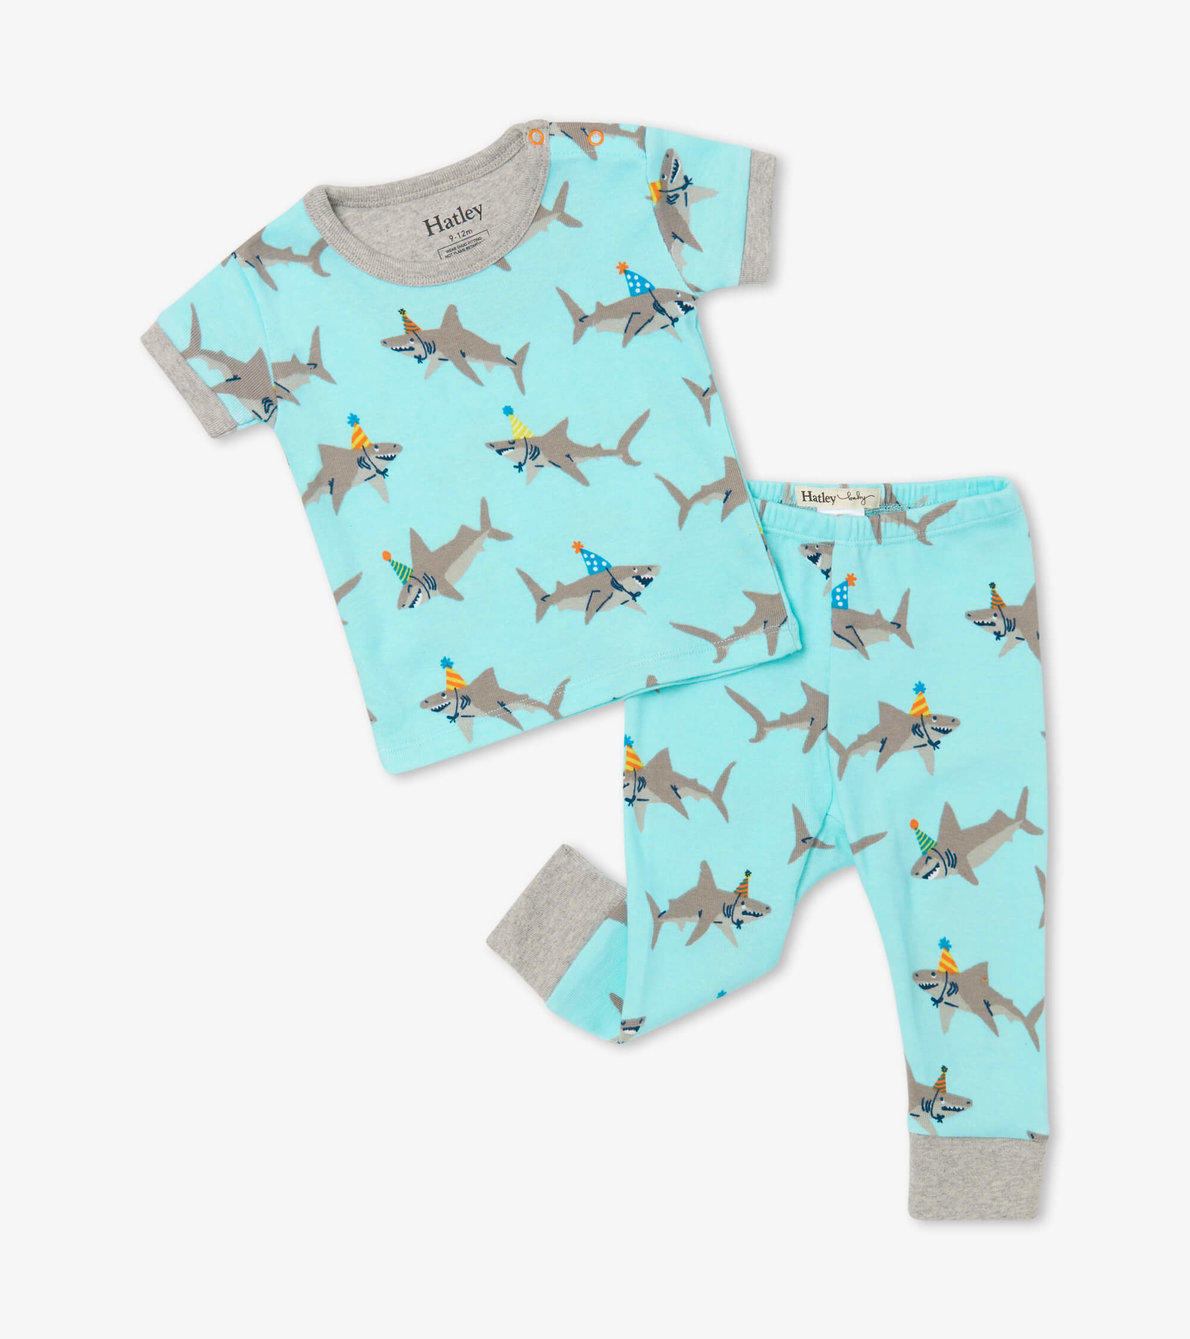 View larger image of Shark Party Organic Cotton Baby Short Sleeve Pajama Set